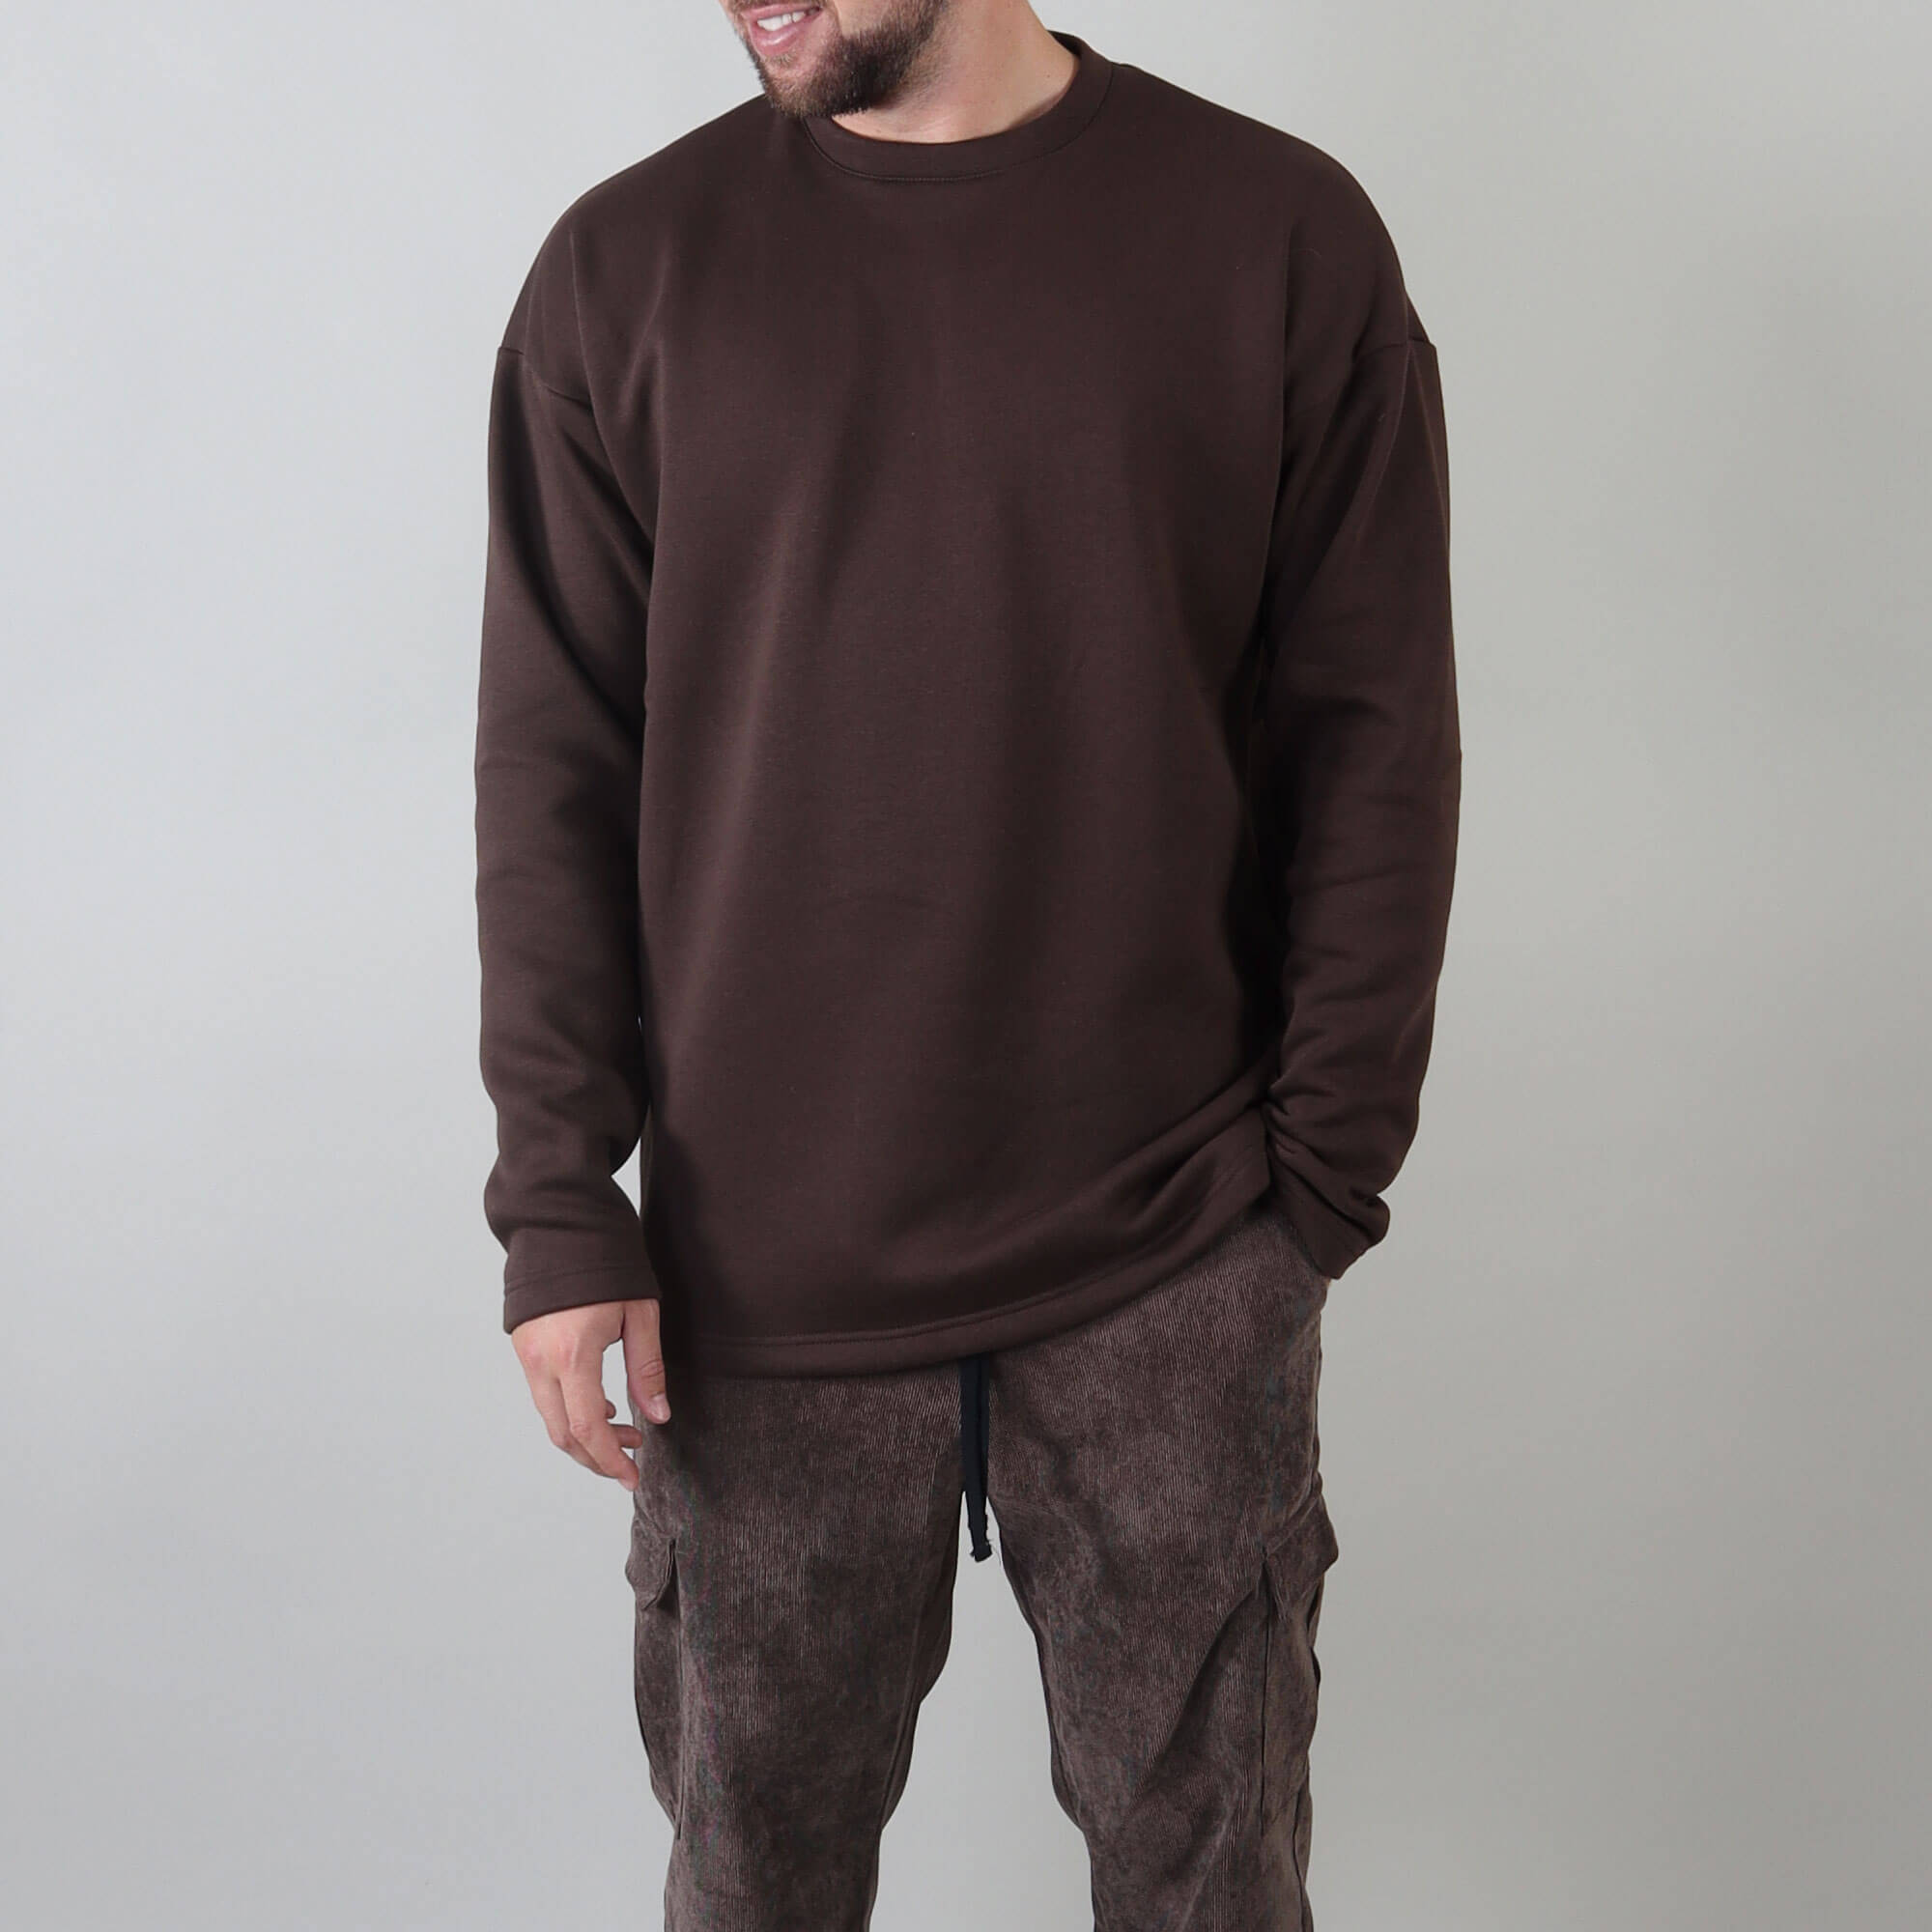 PRJCT sweater brown